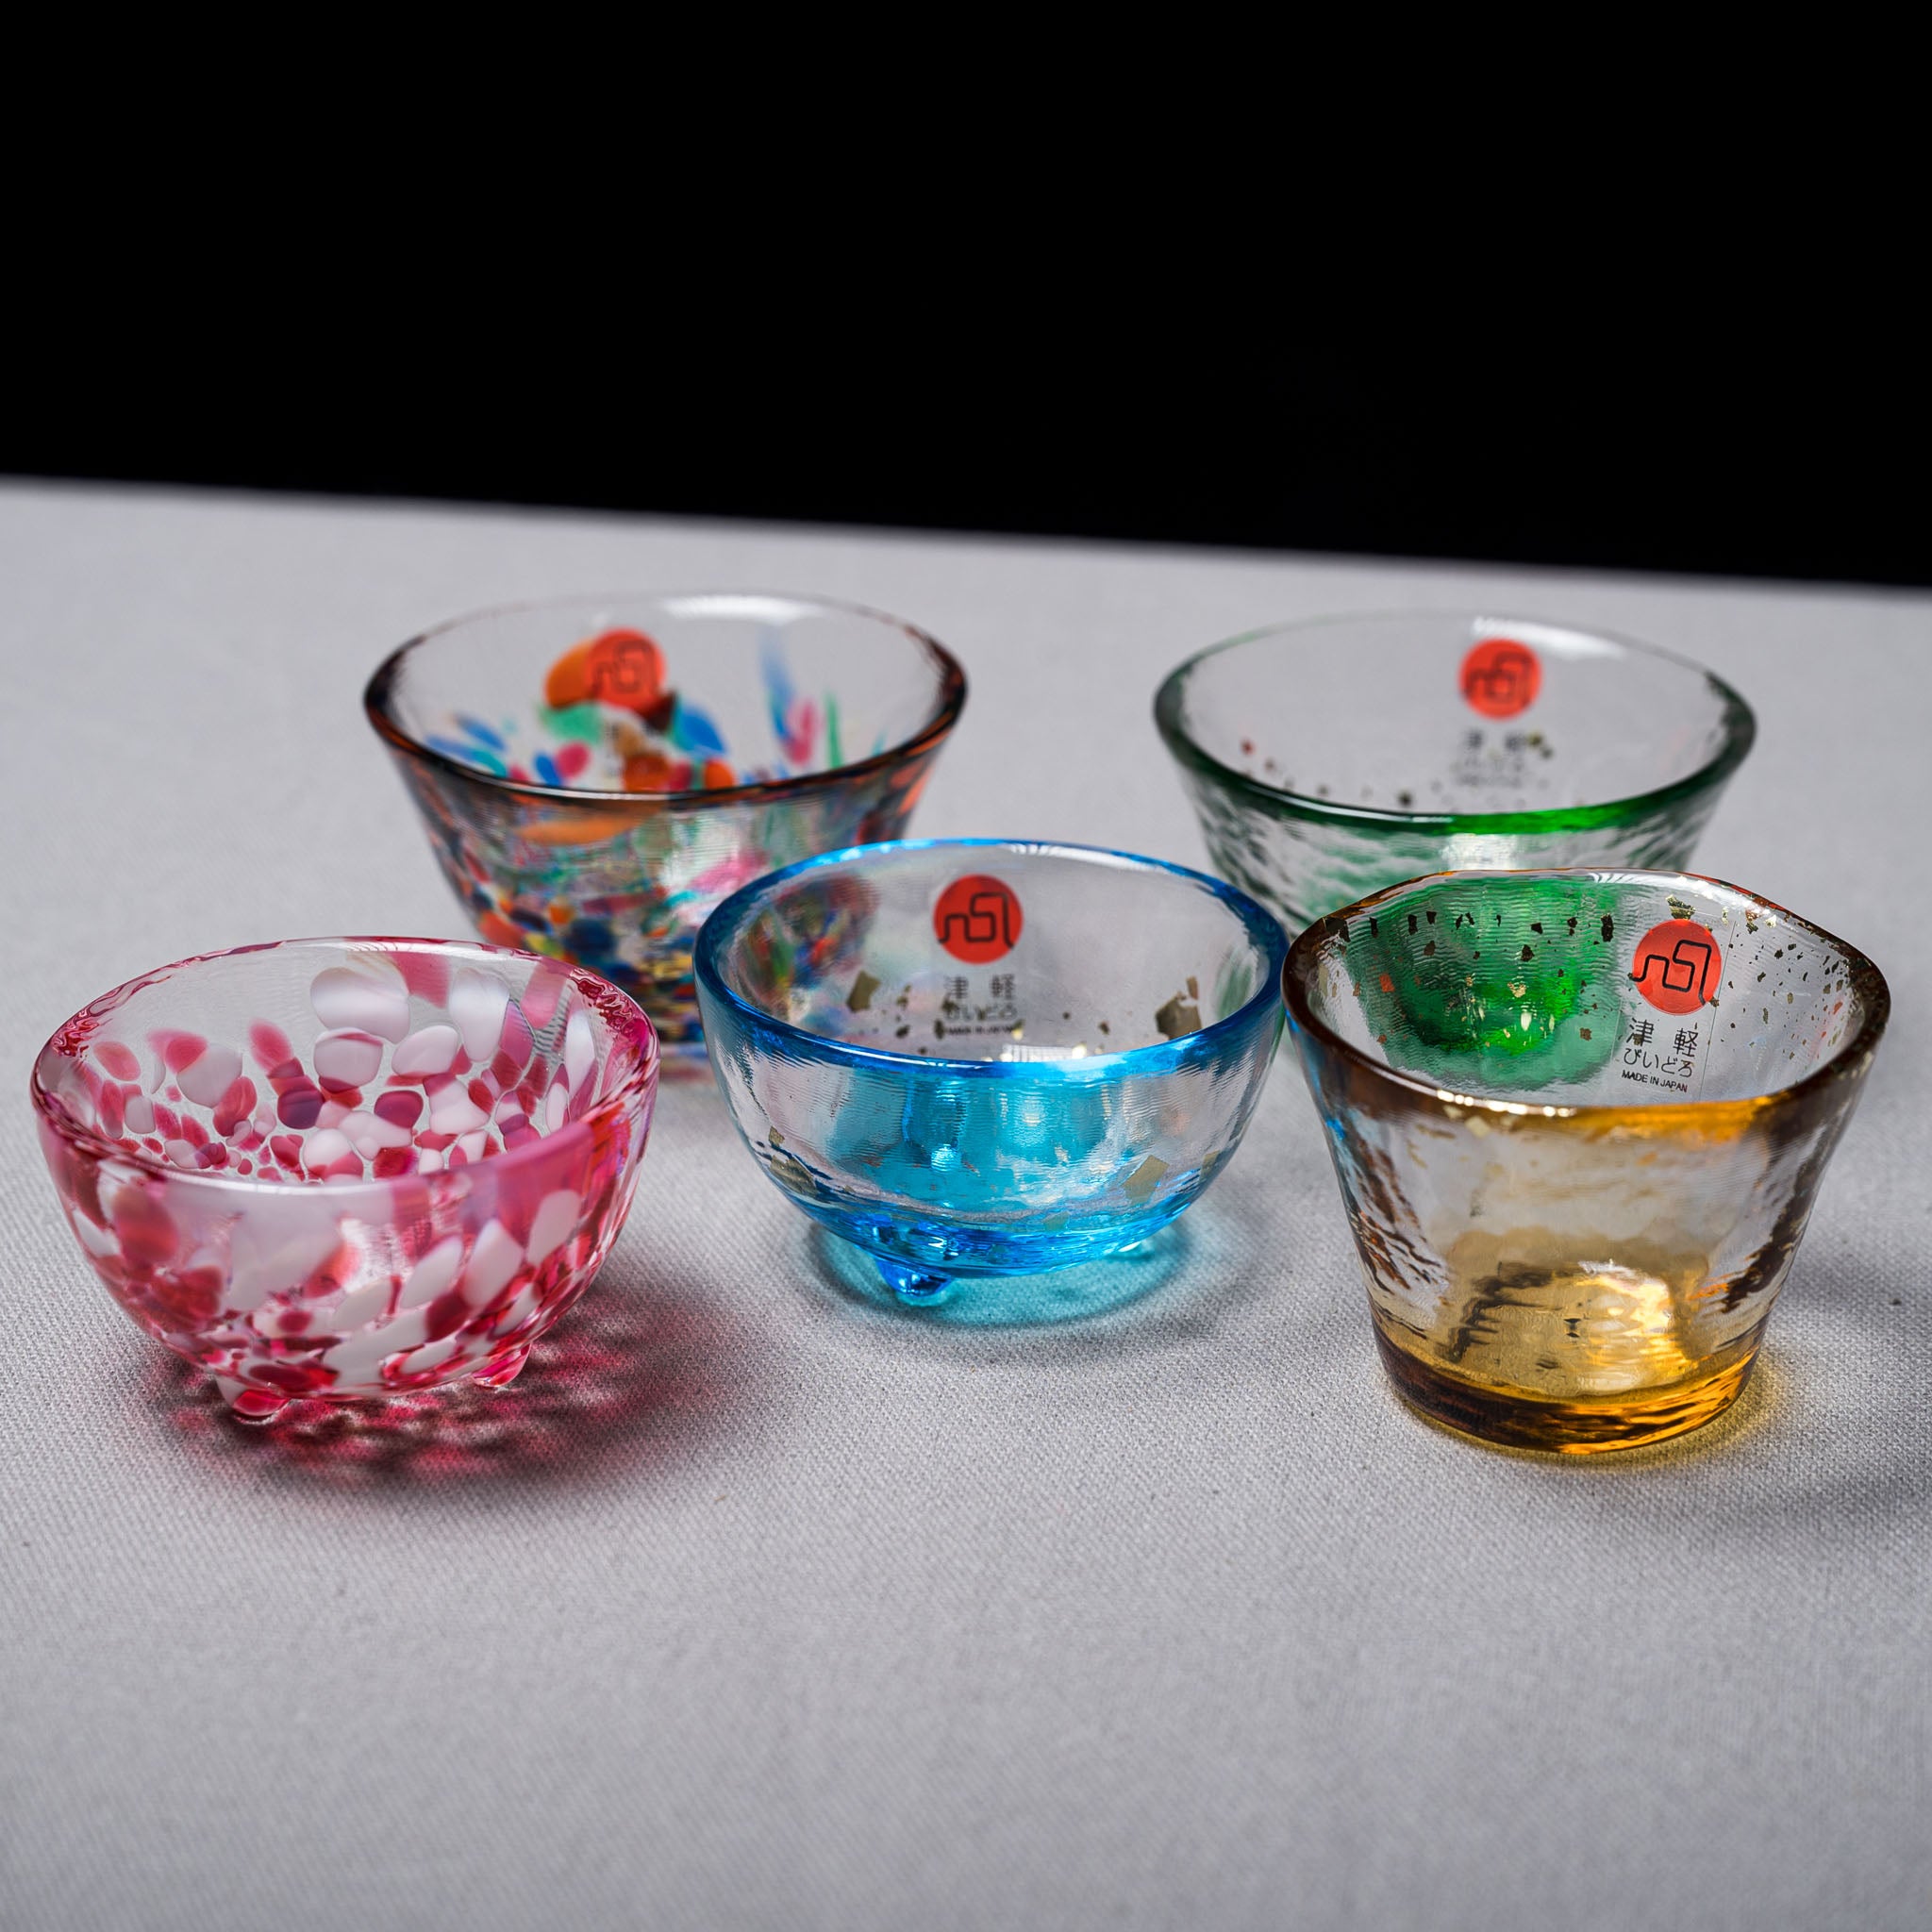 Assort Sake Glass - Set of 5 / 津軽びいどろ 酒器セット